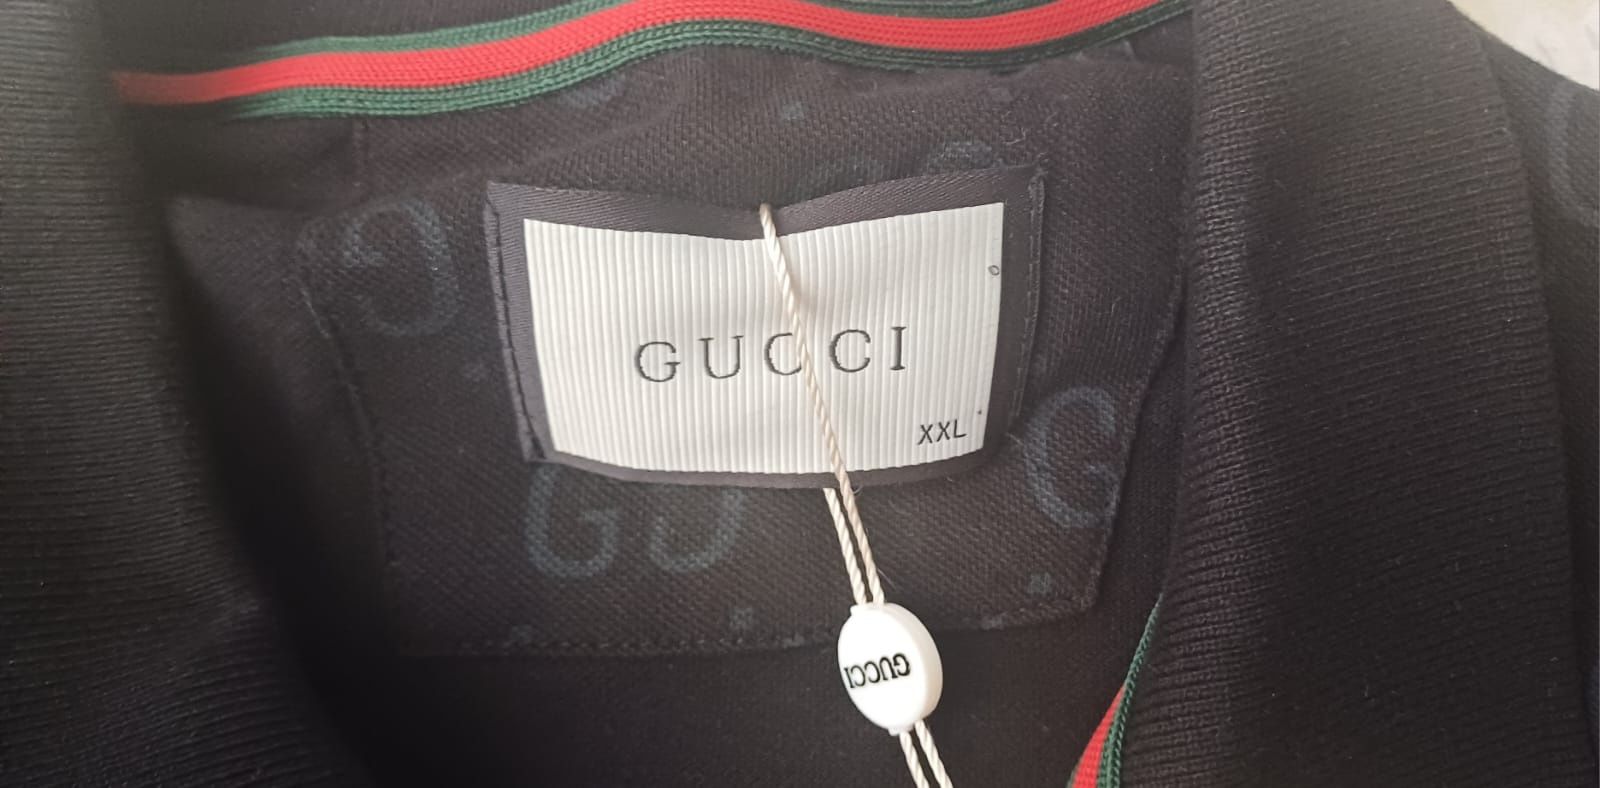 Gucci koszulka Polo xxl